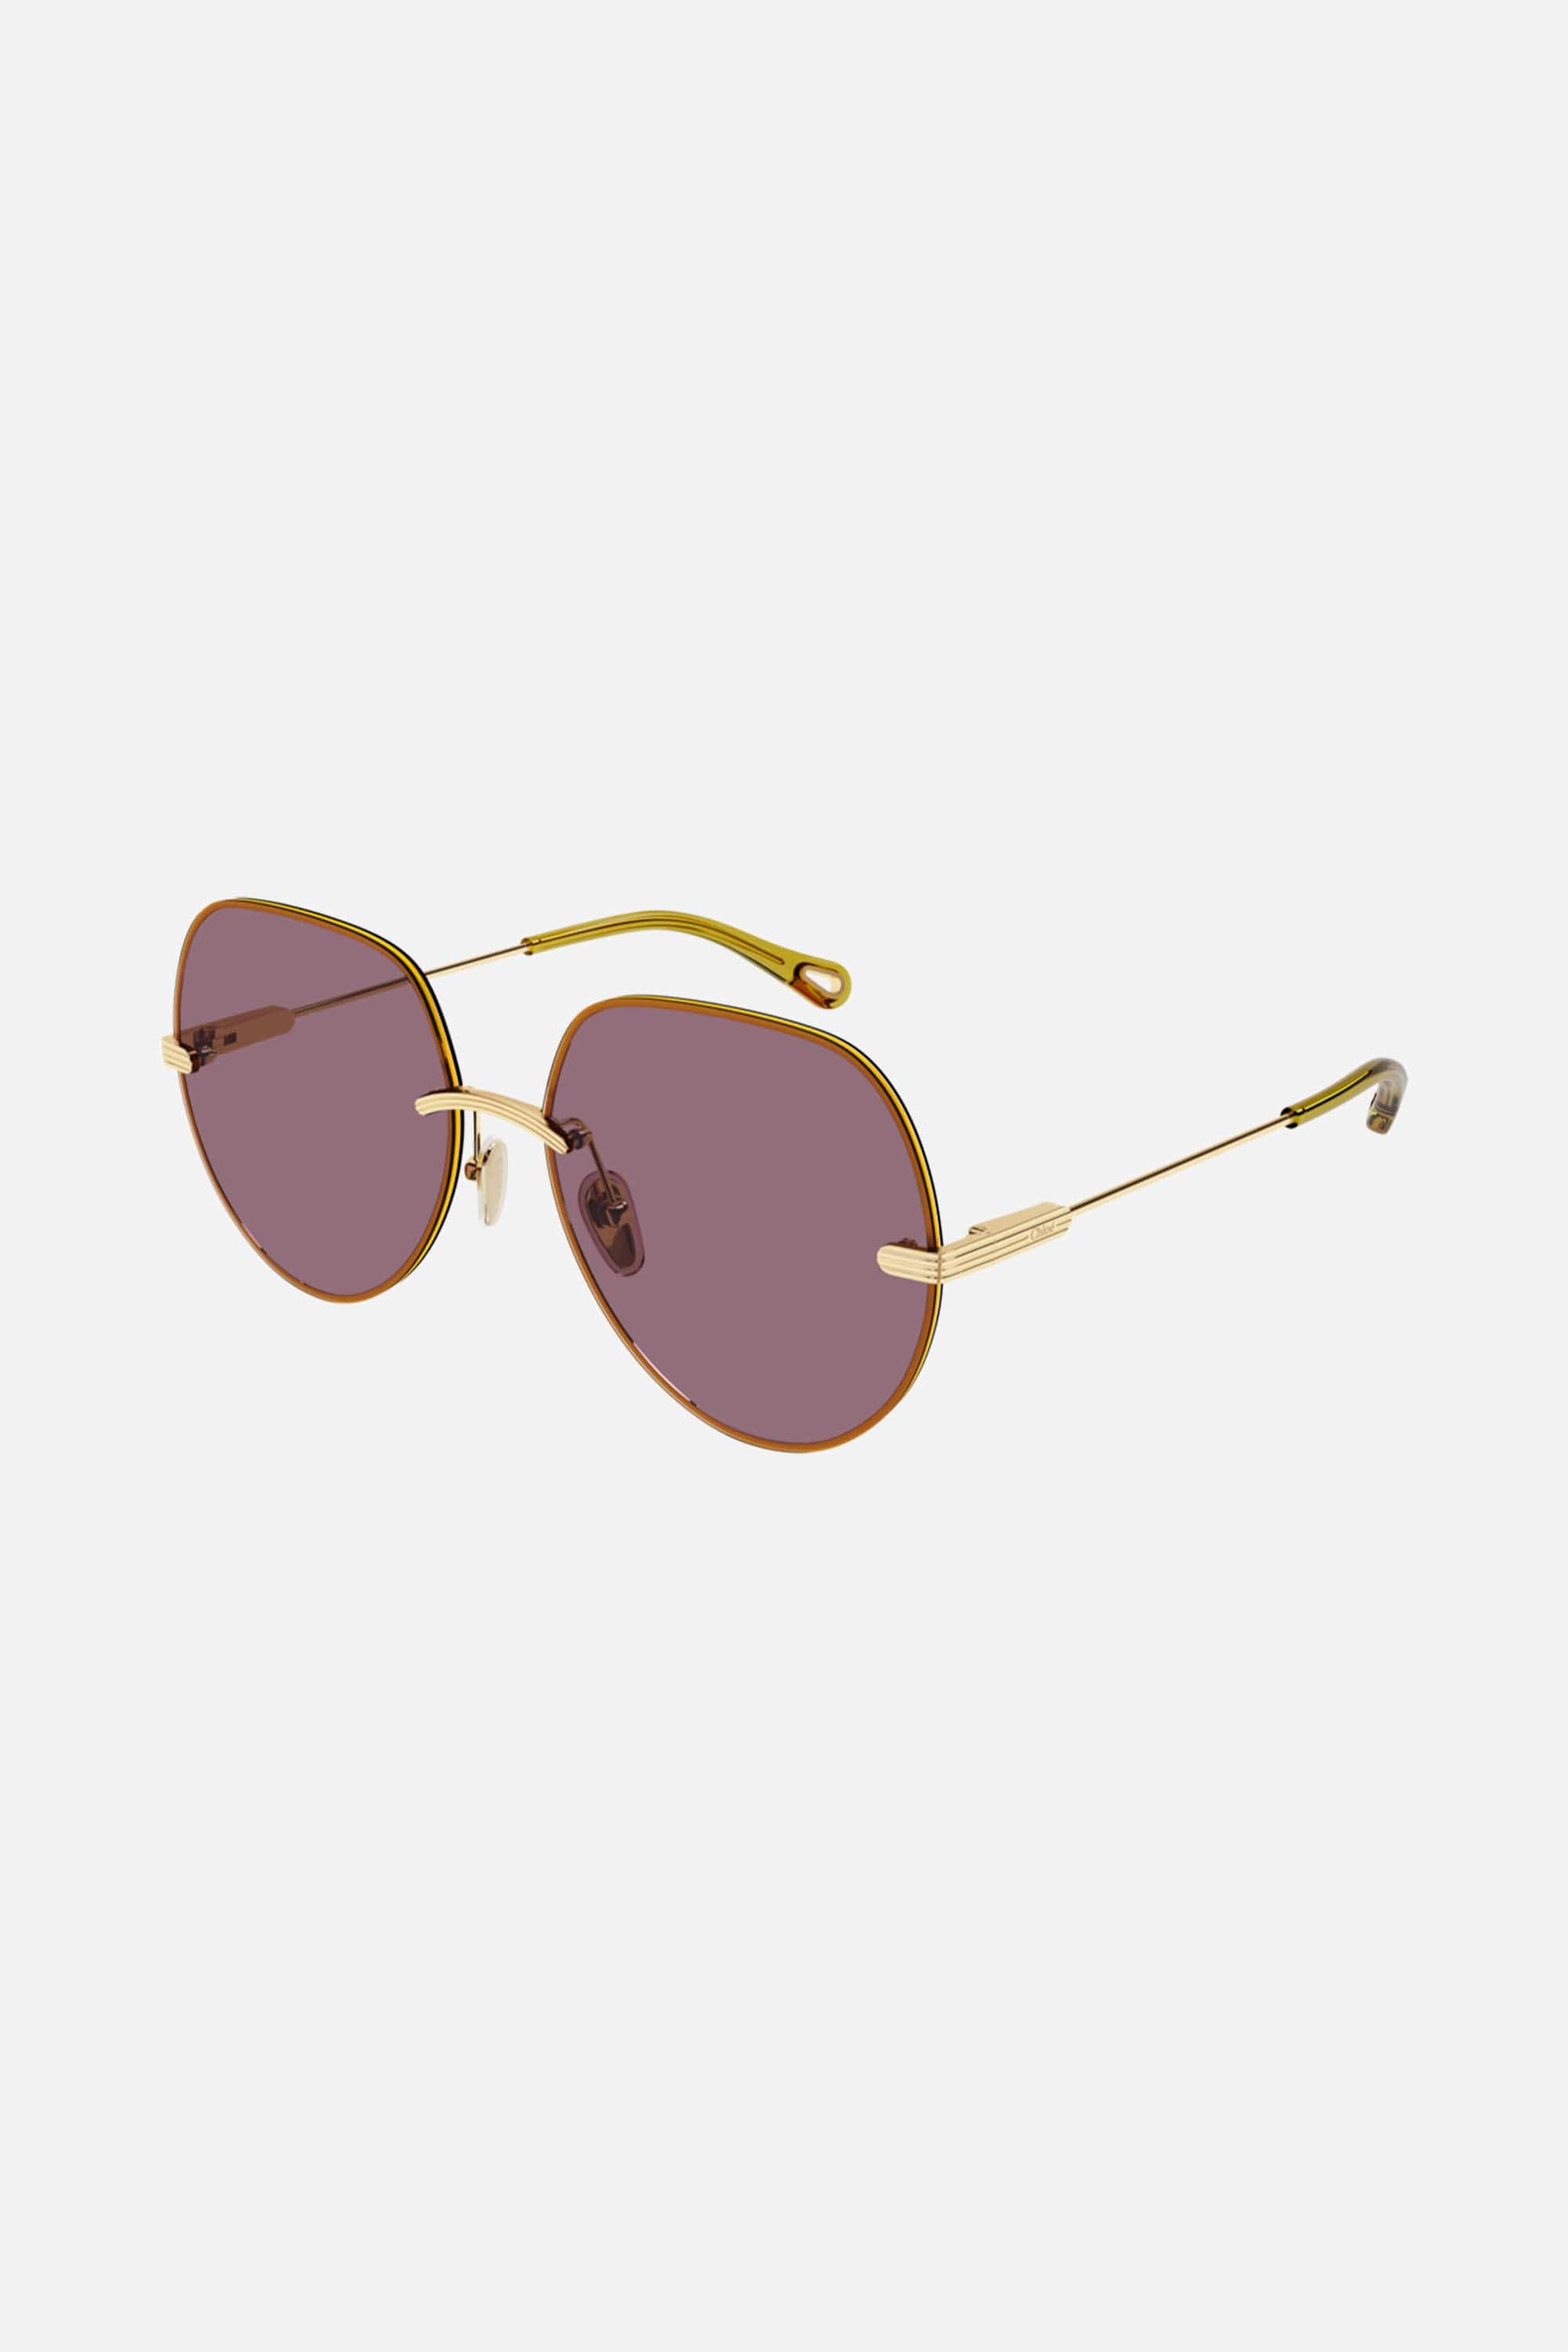 Chloe metal round light purple sunglasses - Eyewear Club